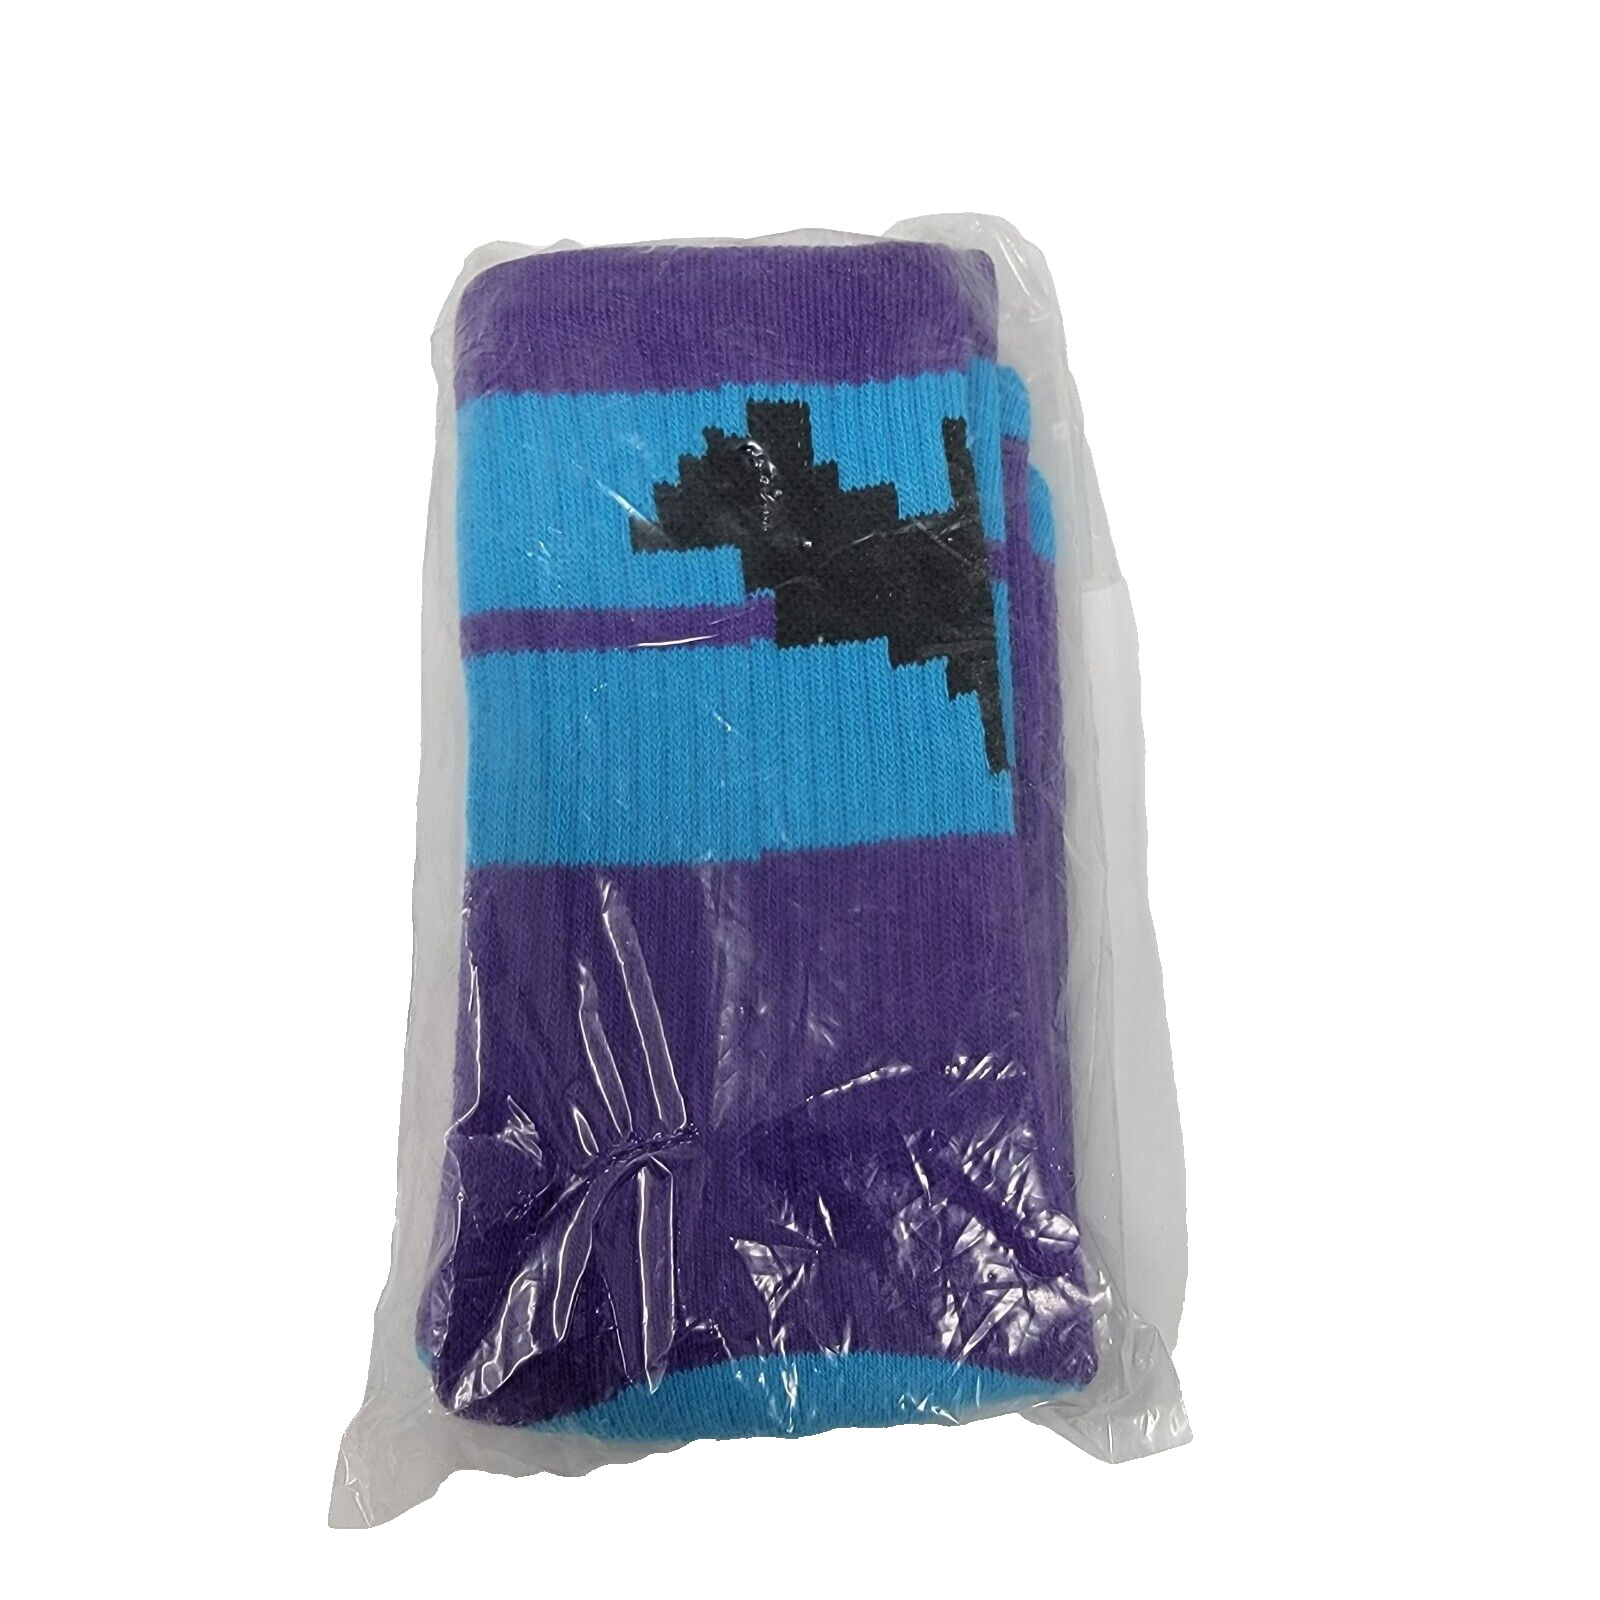 Funko DC 8-Bit Batman Socks Purple Blue Gamestop Exclusive